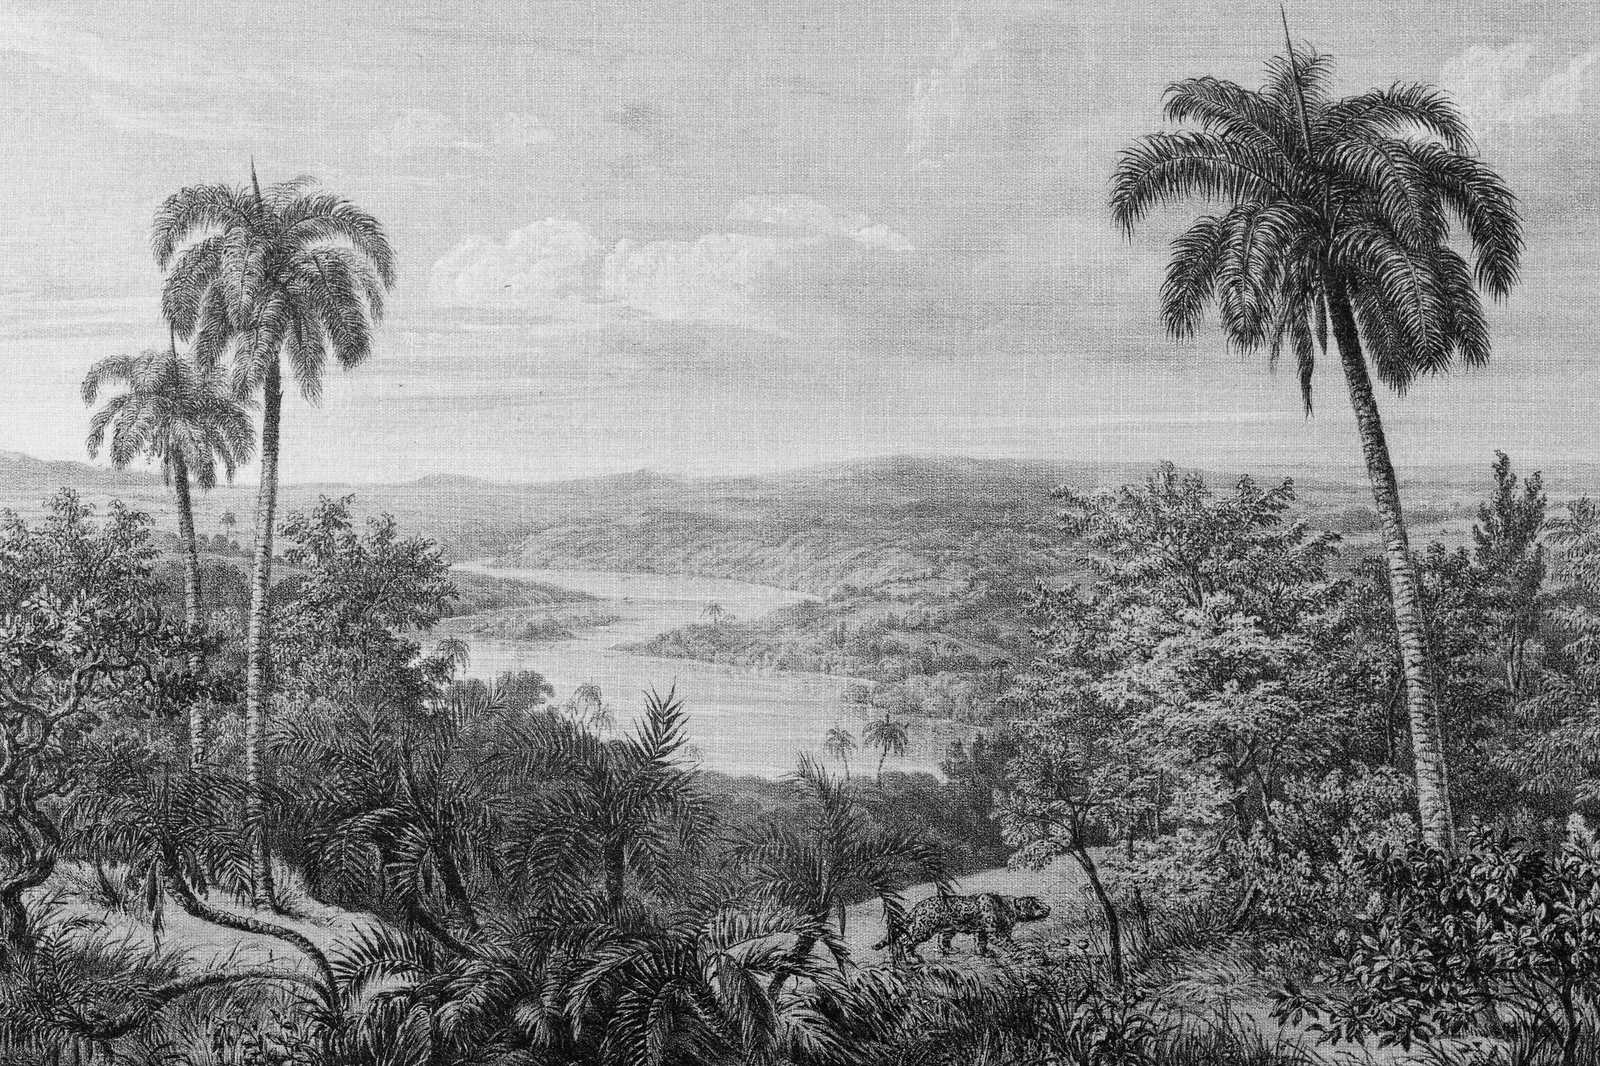             Canvas painting Rainforest View with Linen Texture Optics - 0.90 m x 0.60 m
        